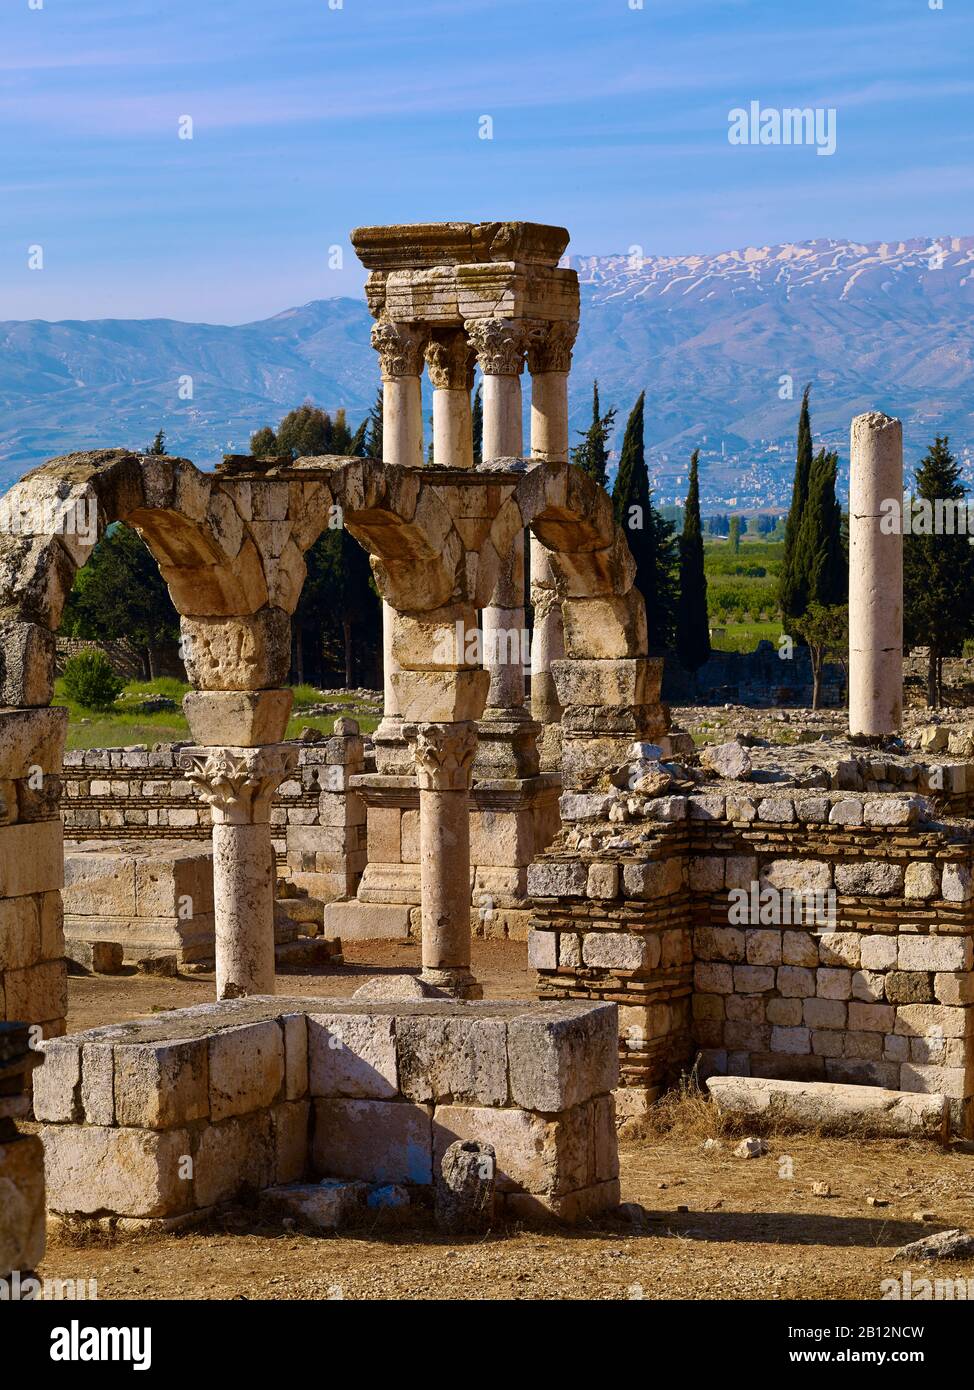 Libanon-Gebirge und Tetrapylon der antiken Stadt Anjar, was Haoush Mousa, Libanon, Naher Osten bedeutet Stockfoto